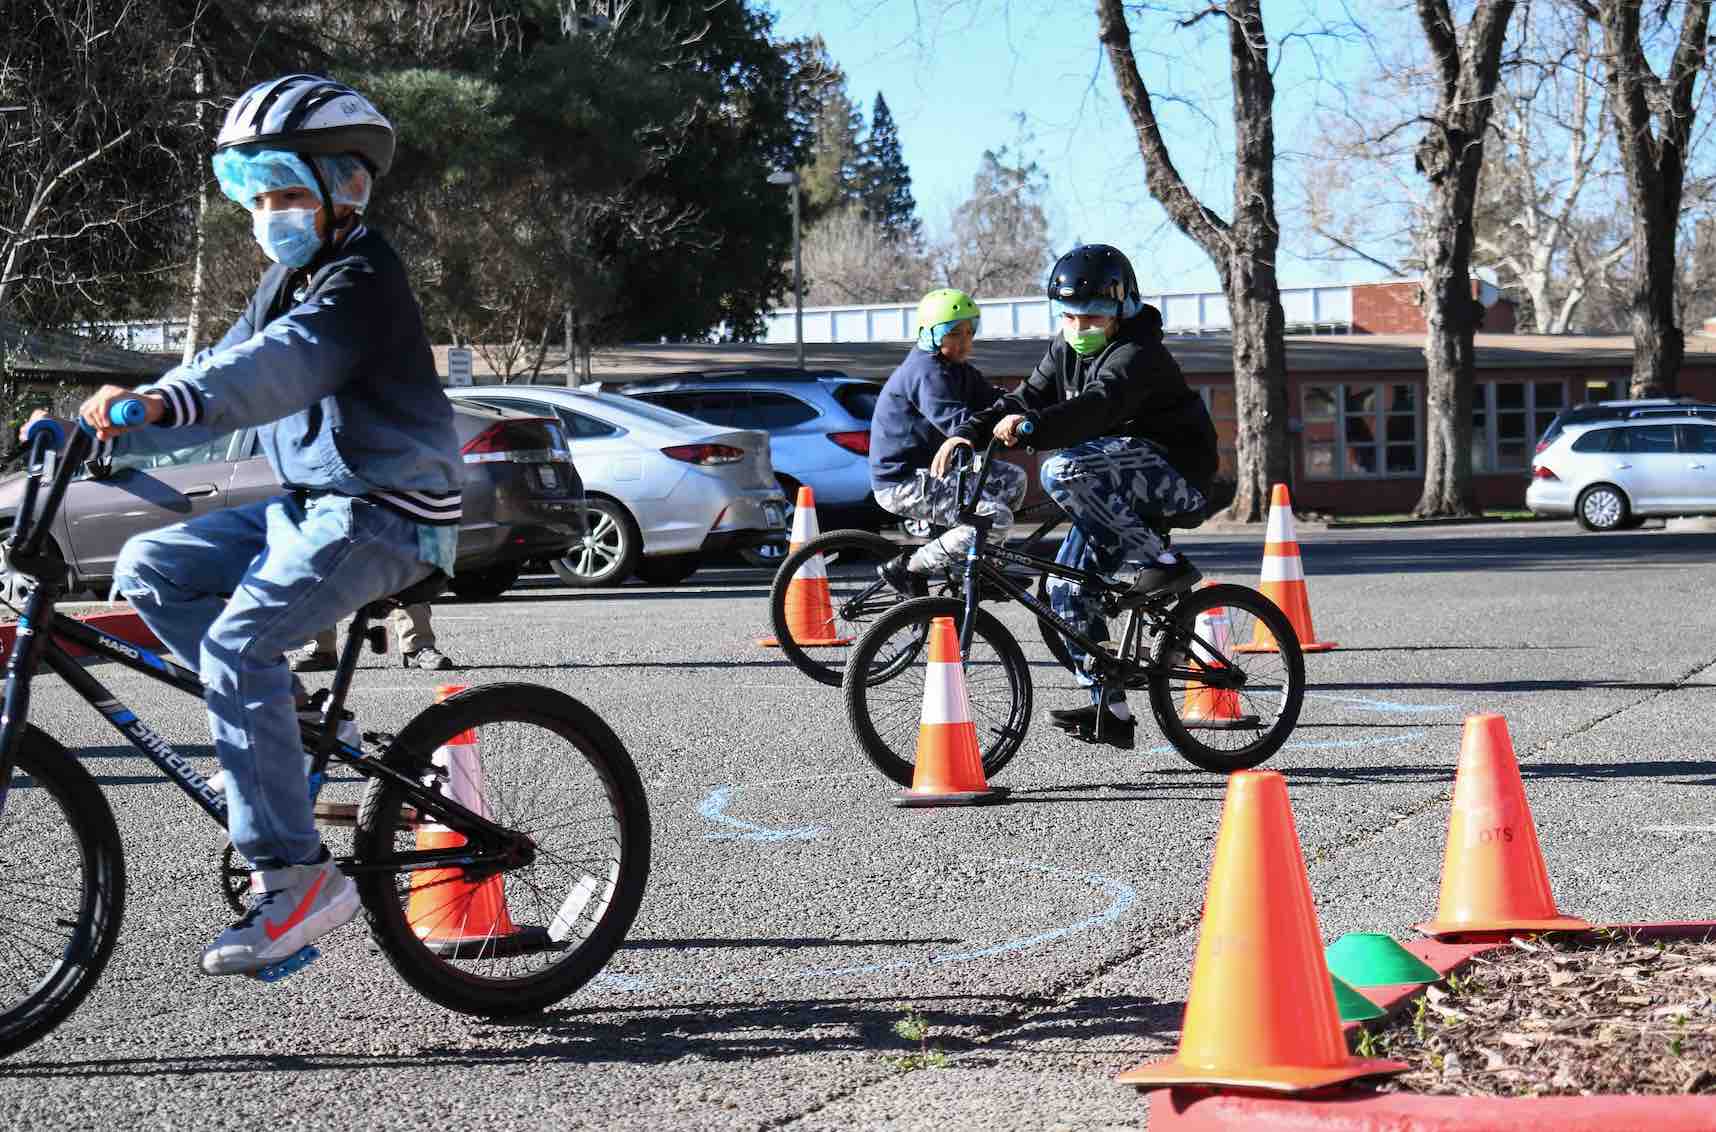 three boys ride bikes around traffic cones